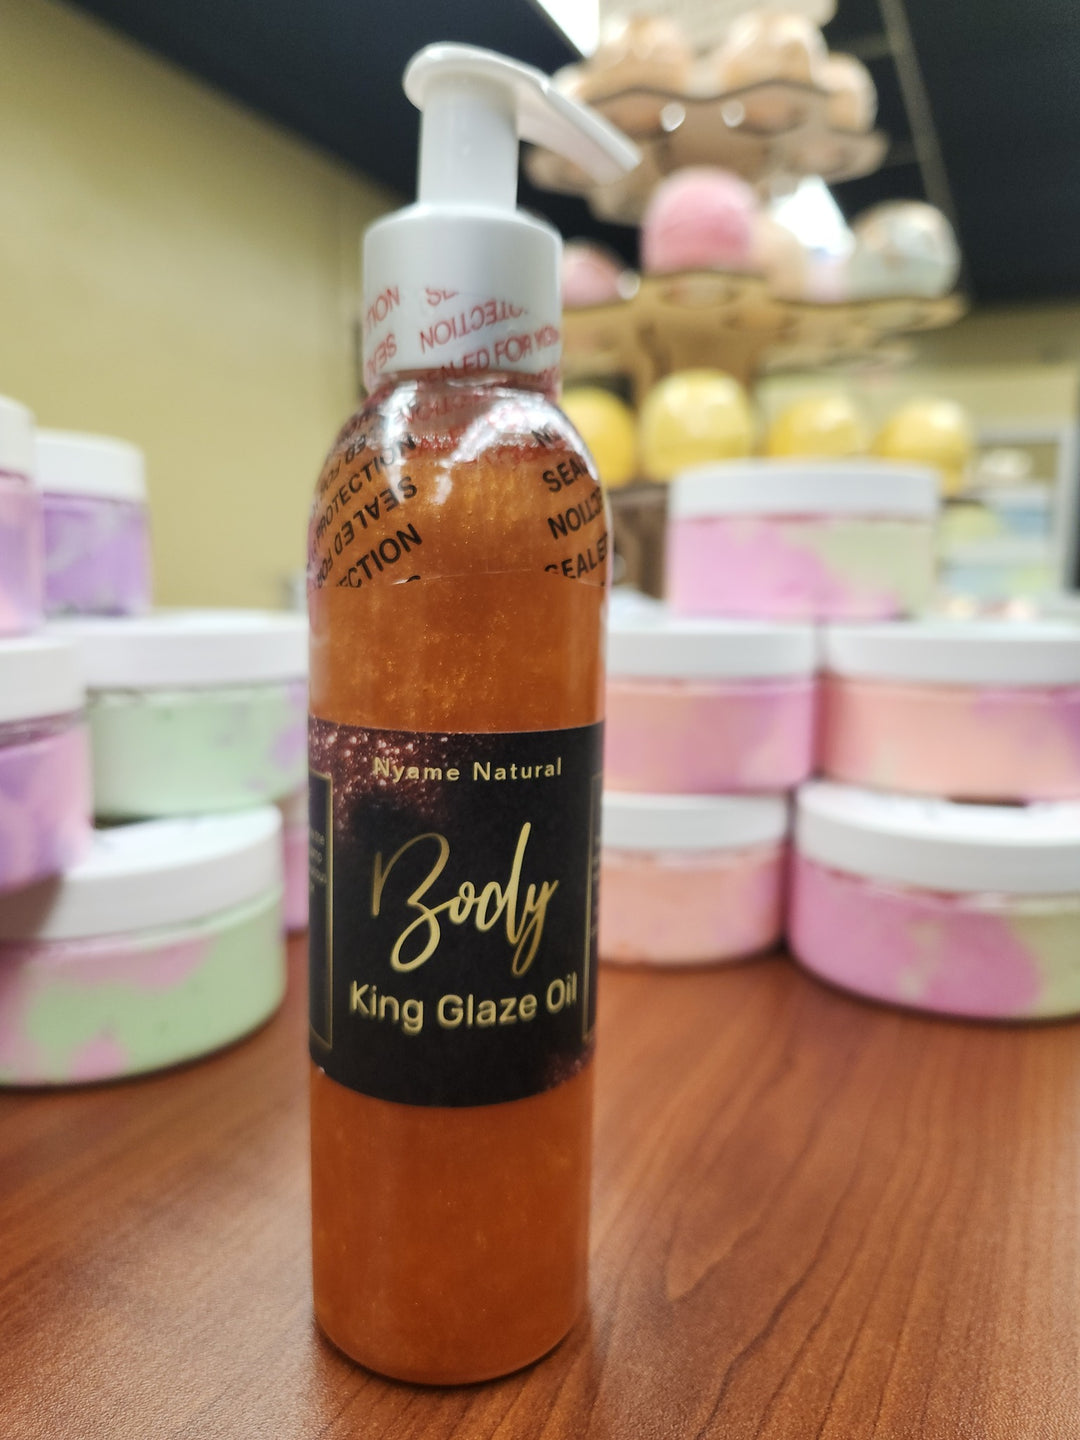 King Glaze Pheromone oil